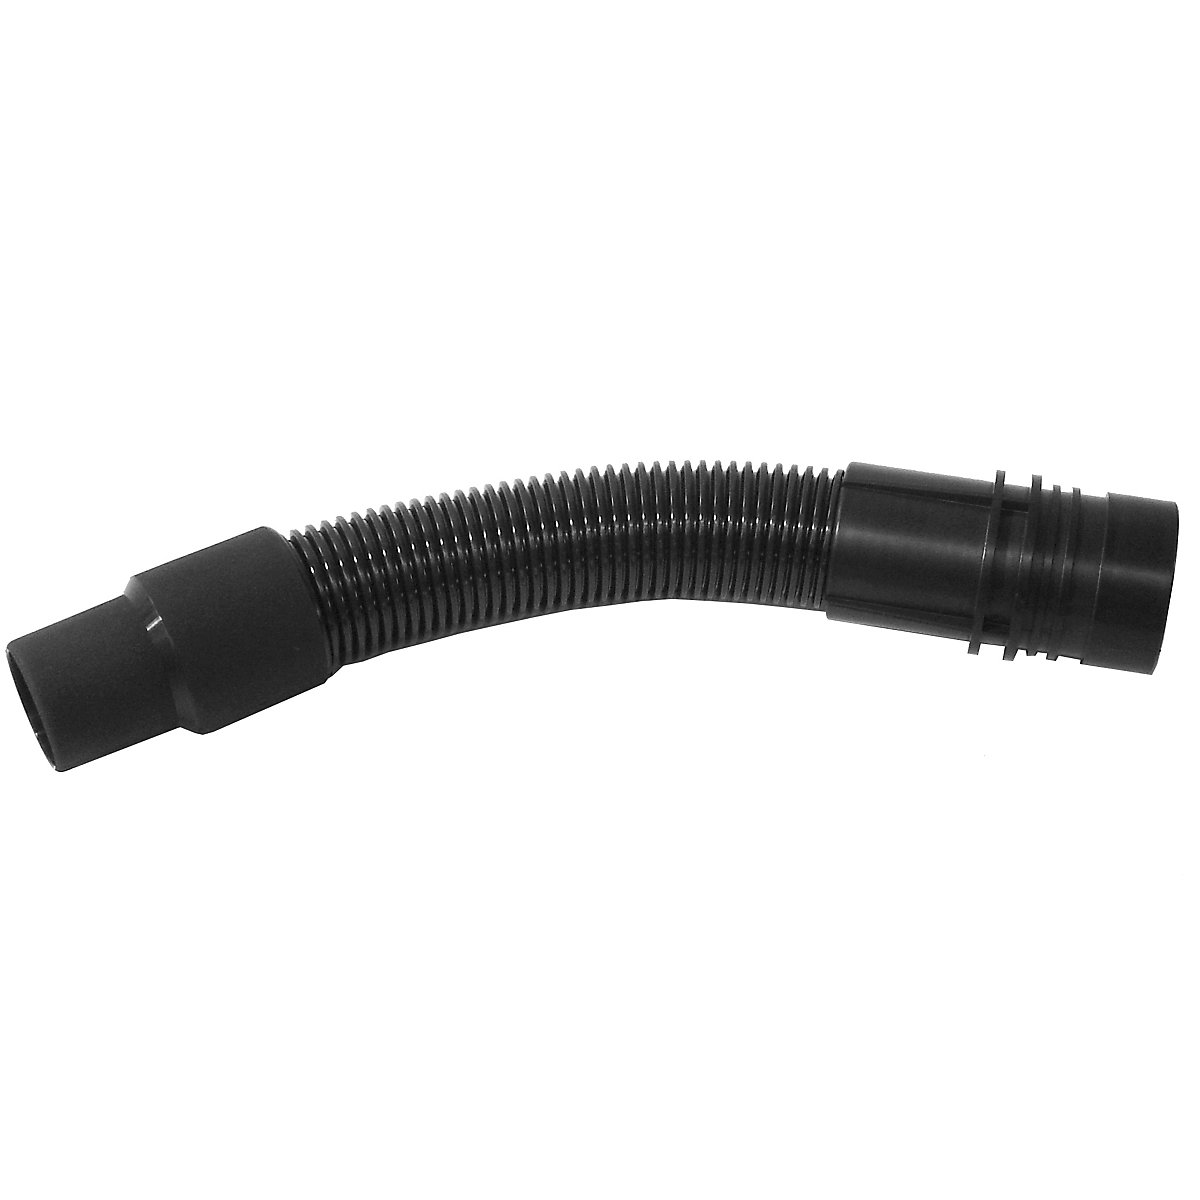 PP suction hose, antistatic, length 5 m-3